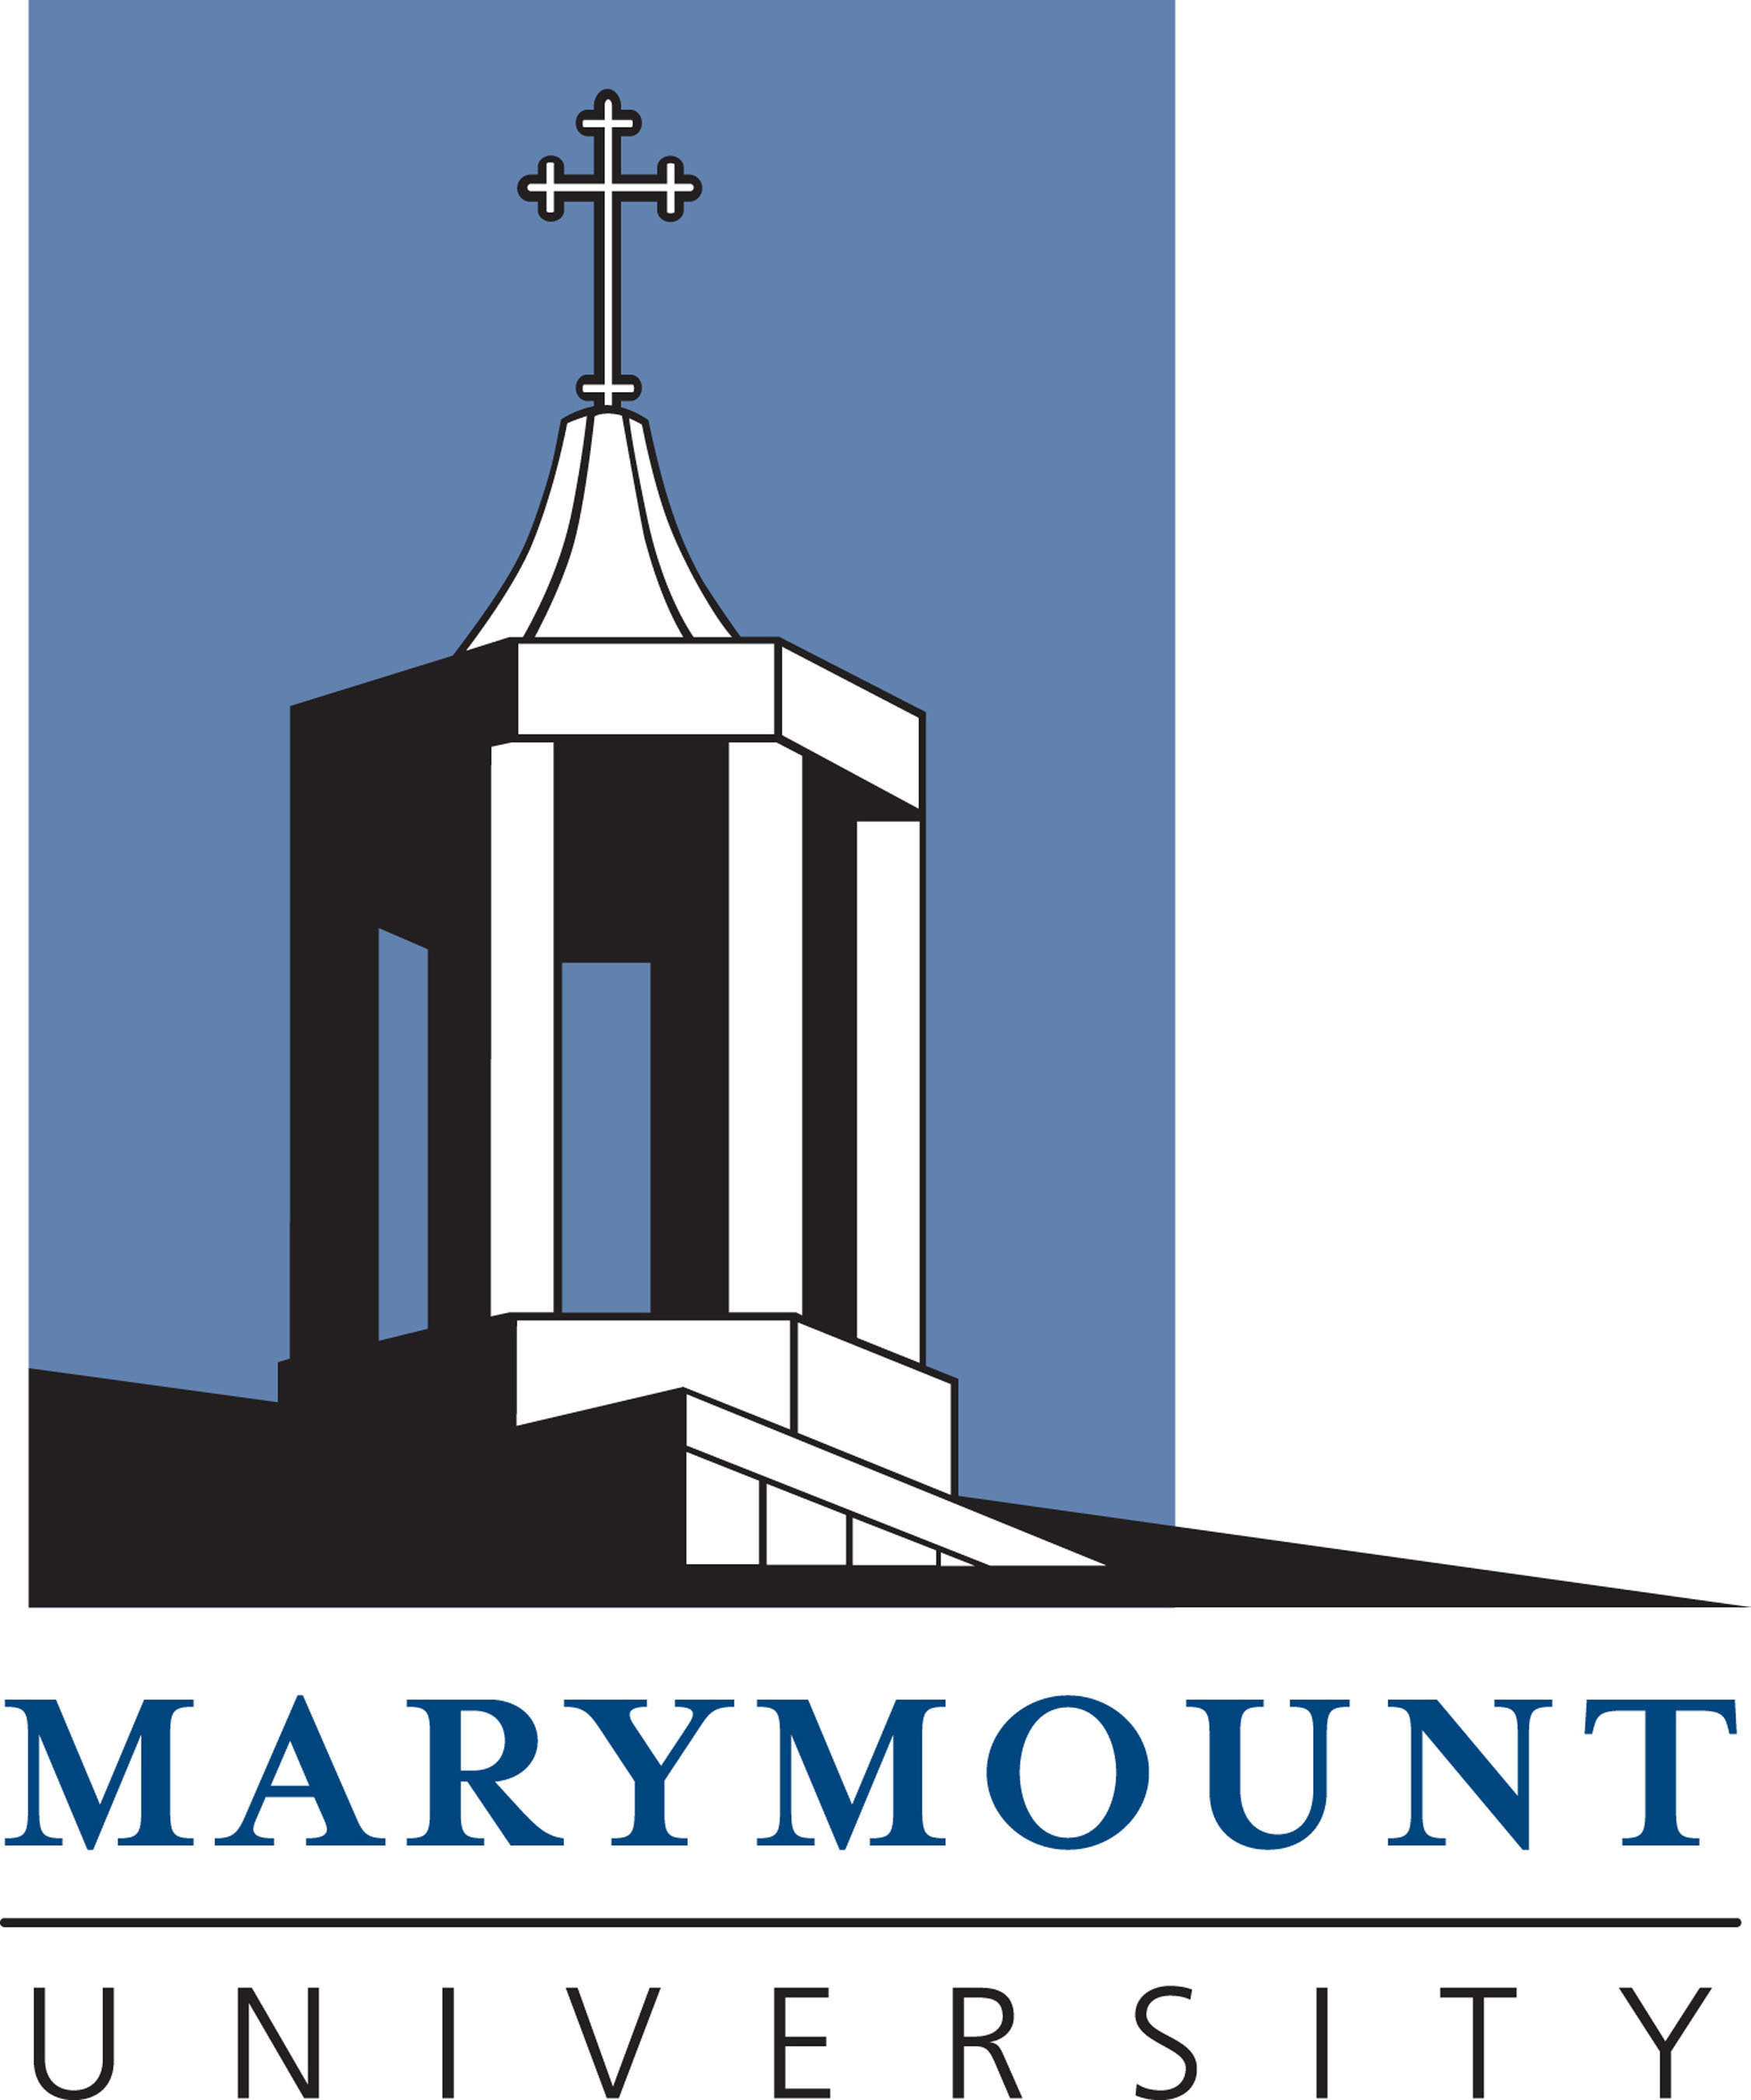 Marymount University logo. (PRNewsFoto/Marymount University) (PRNewsFoto/MARYMOUNT UNIVERSITY)